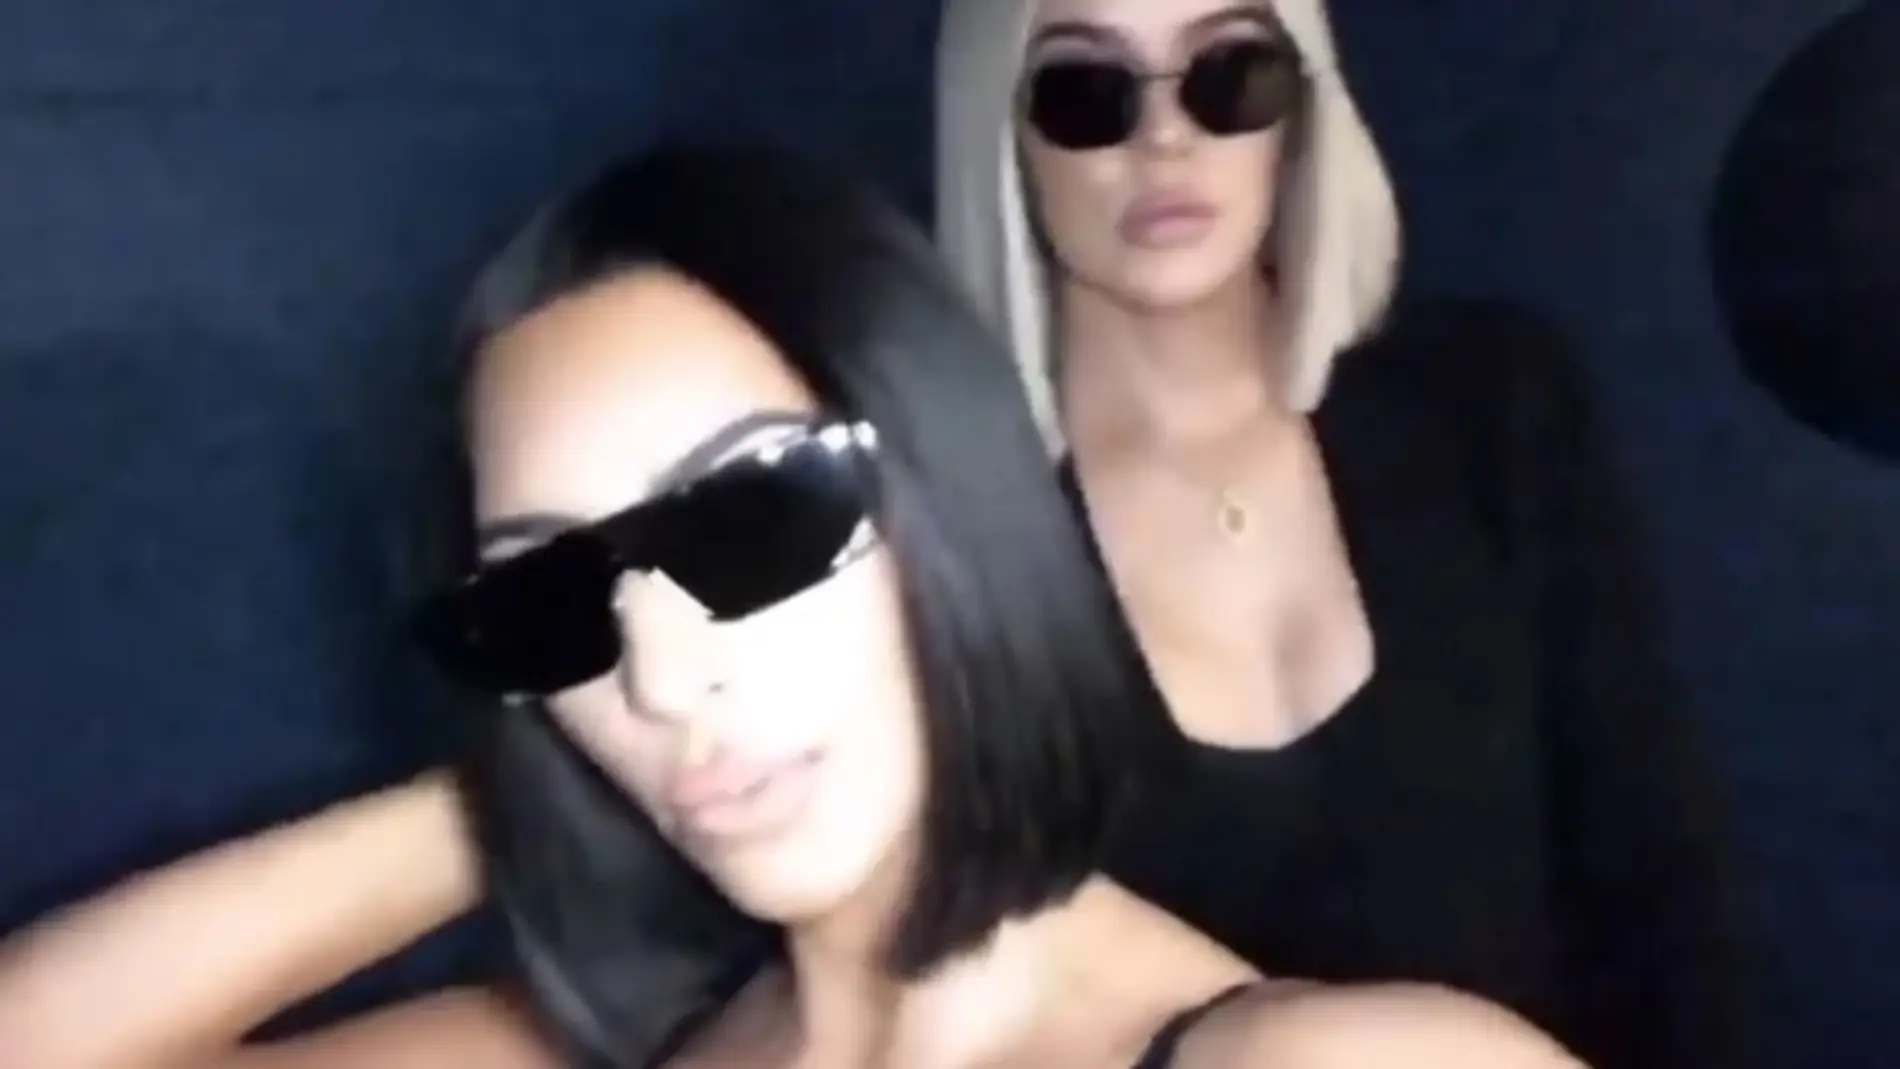 Kim y Khloe Kardashian